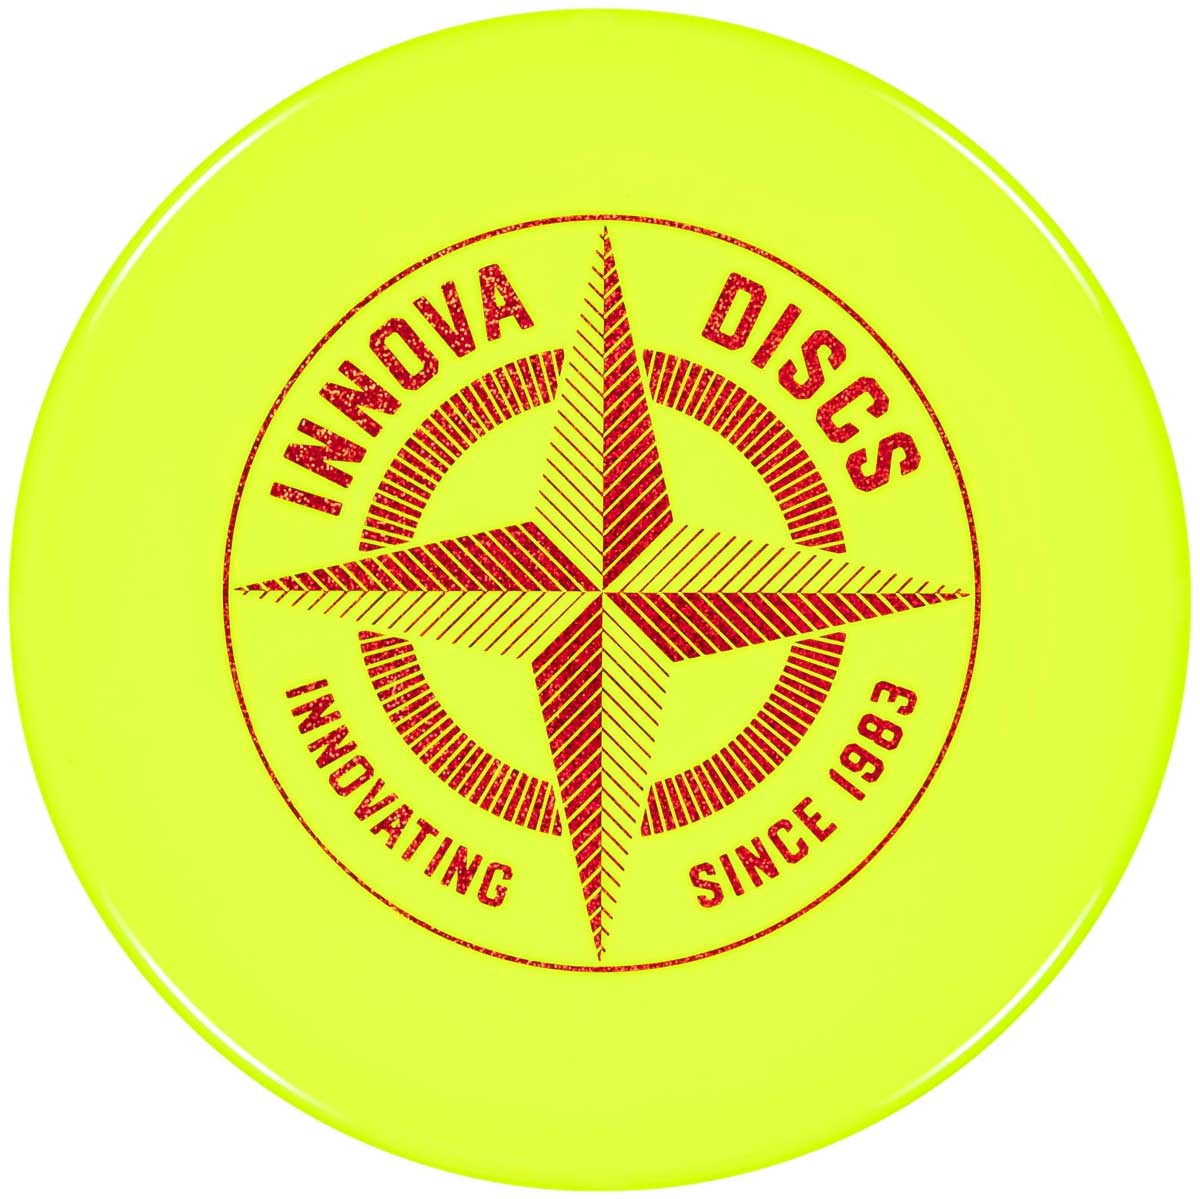 Innova Toro - Star Mid Range Disc - First Run. Yellow color. 